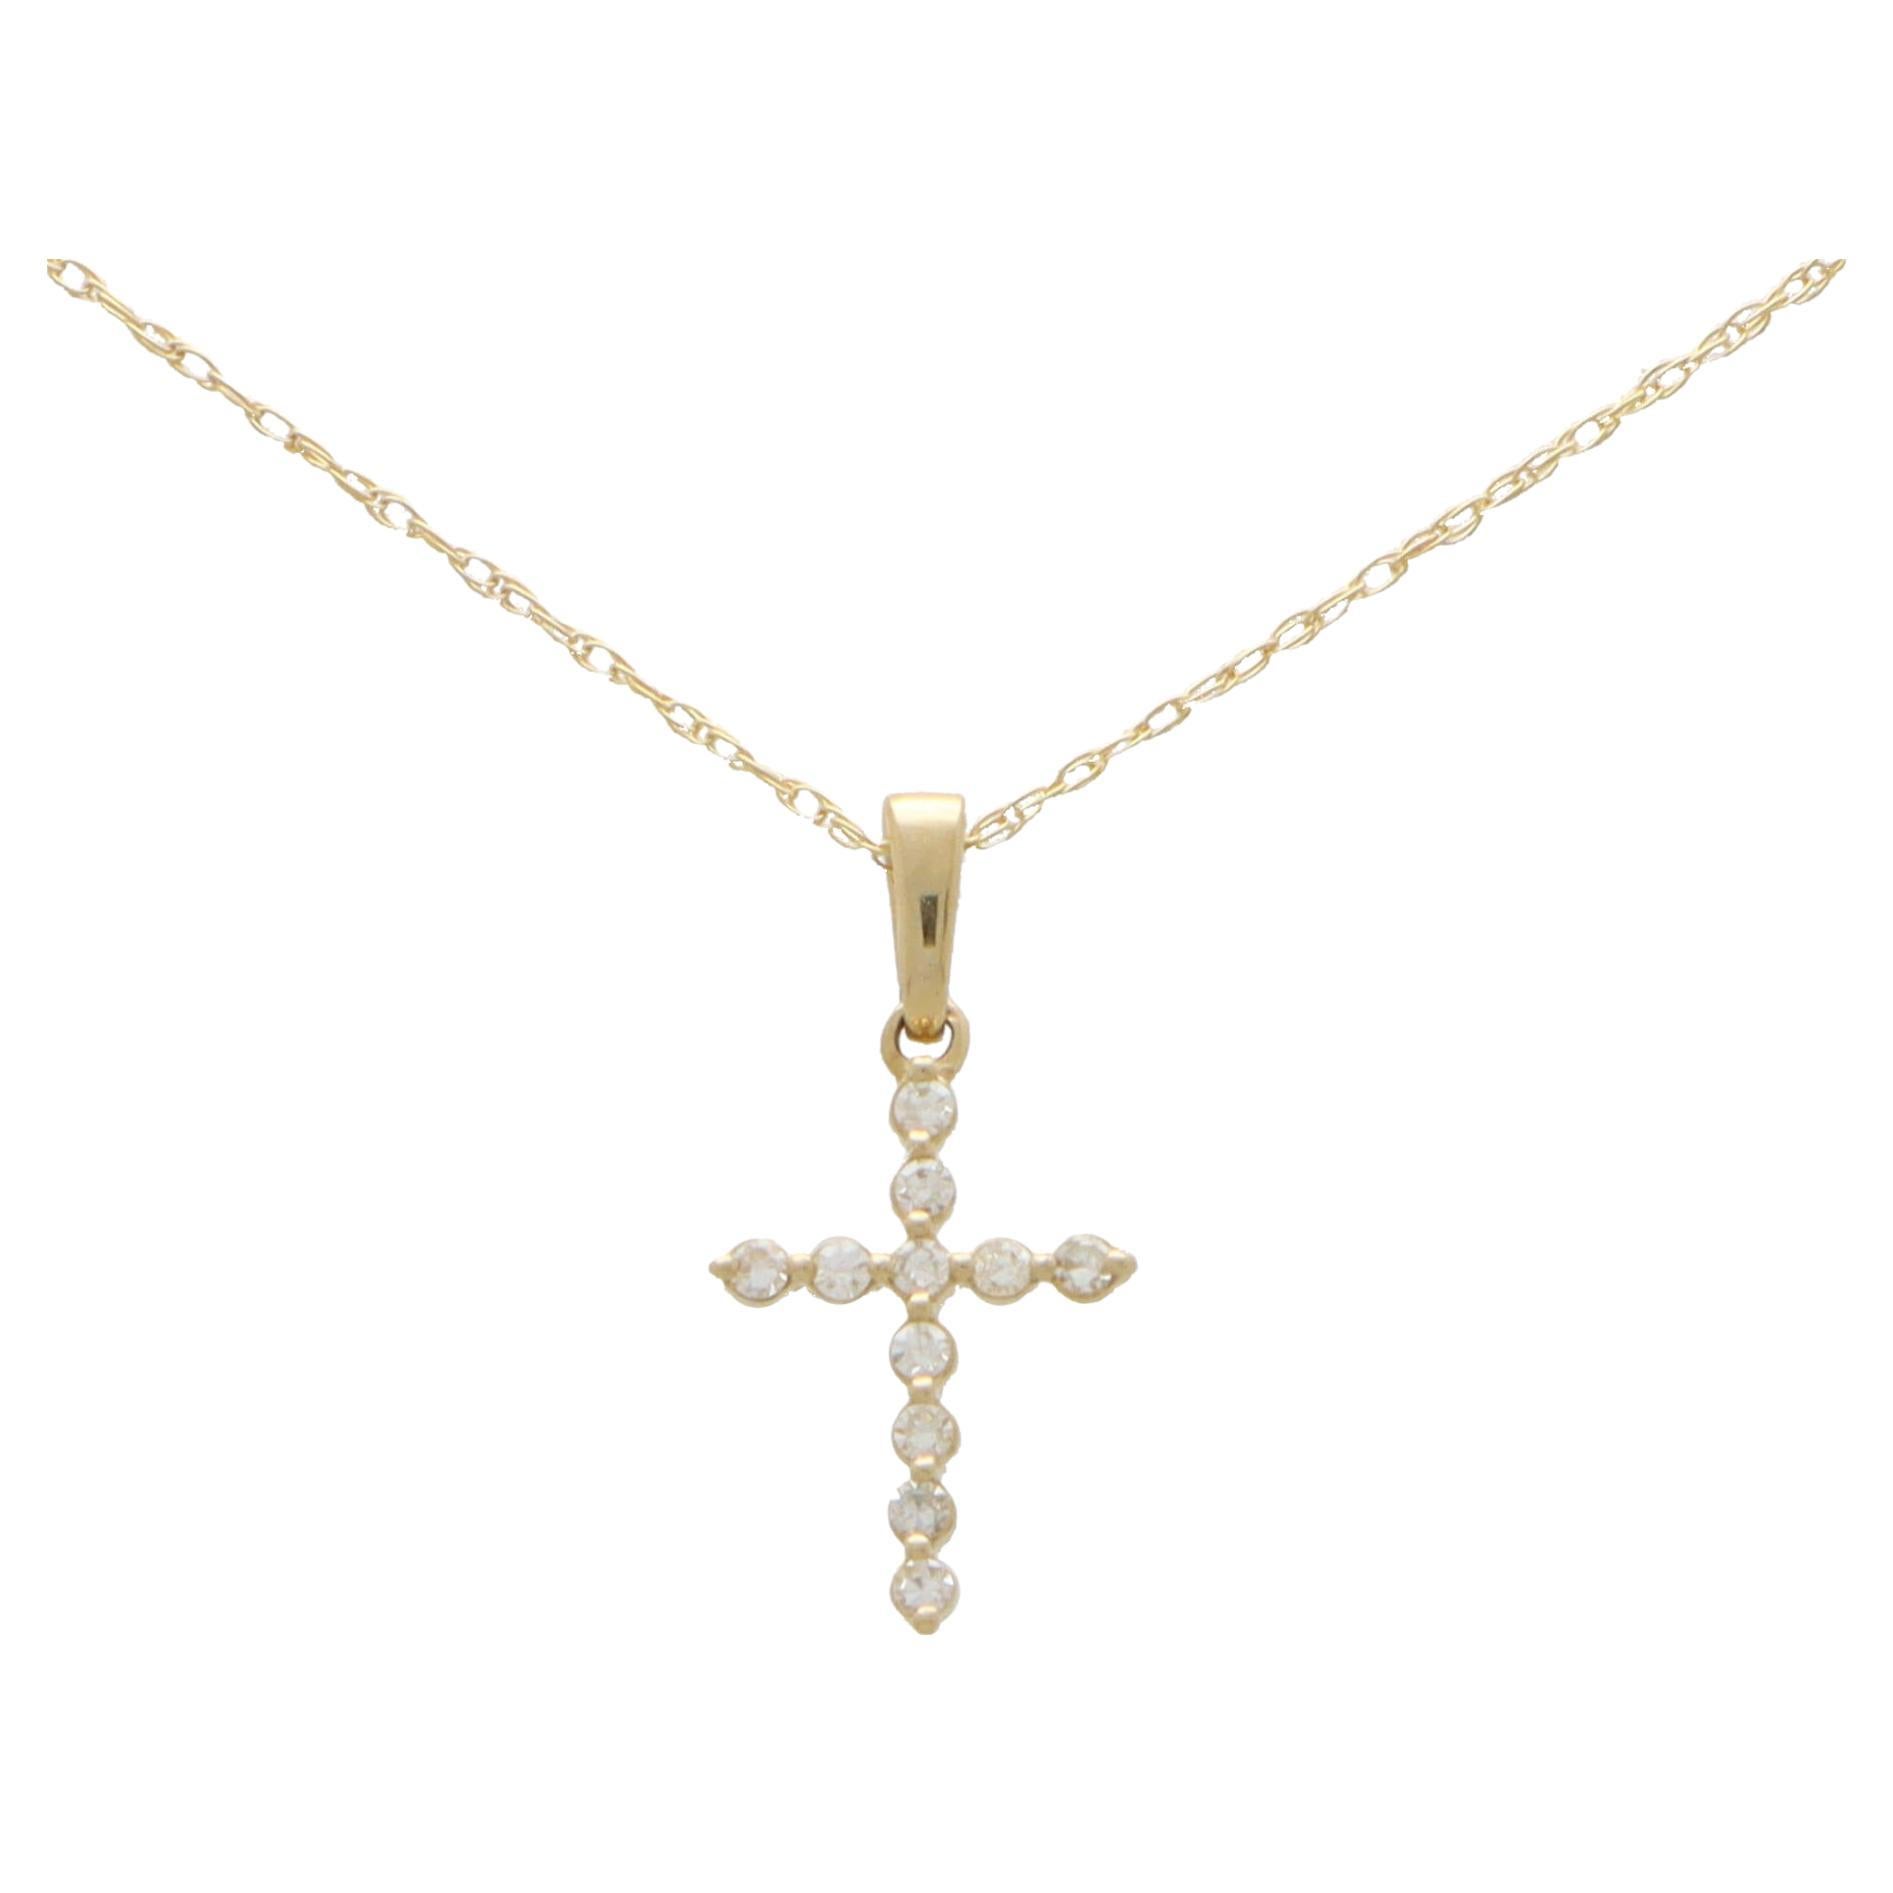  Diamond Cross Pendant Set in 14k Yellow Gold